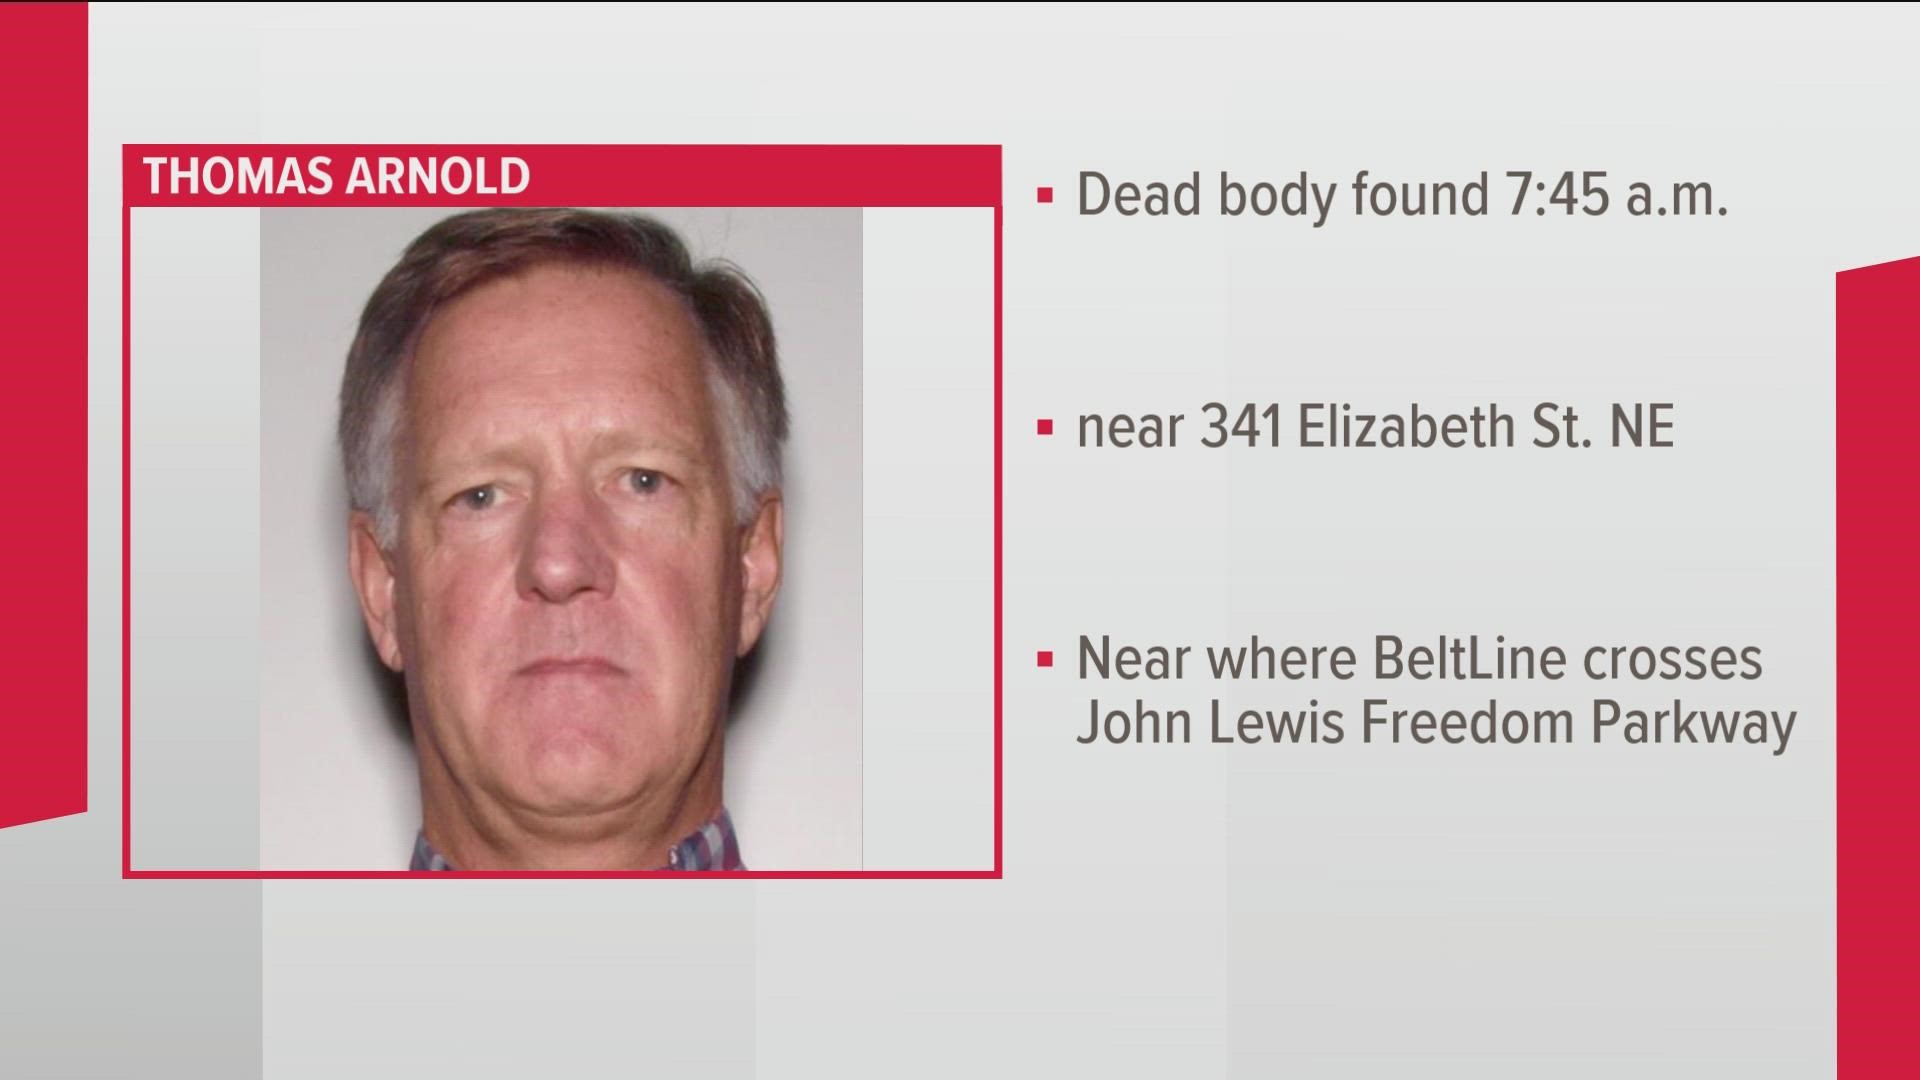 Atlanta Police later identified the man killed as Thomas Arnold.